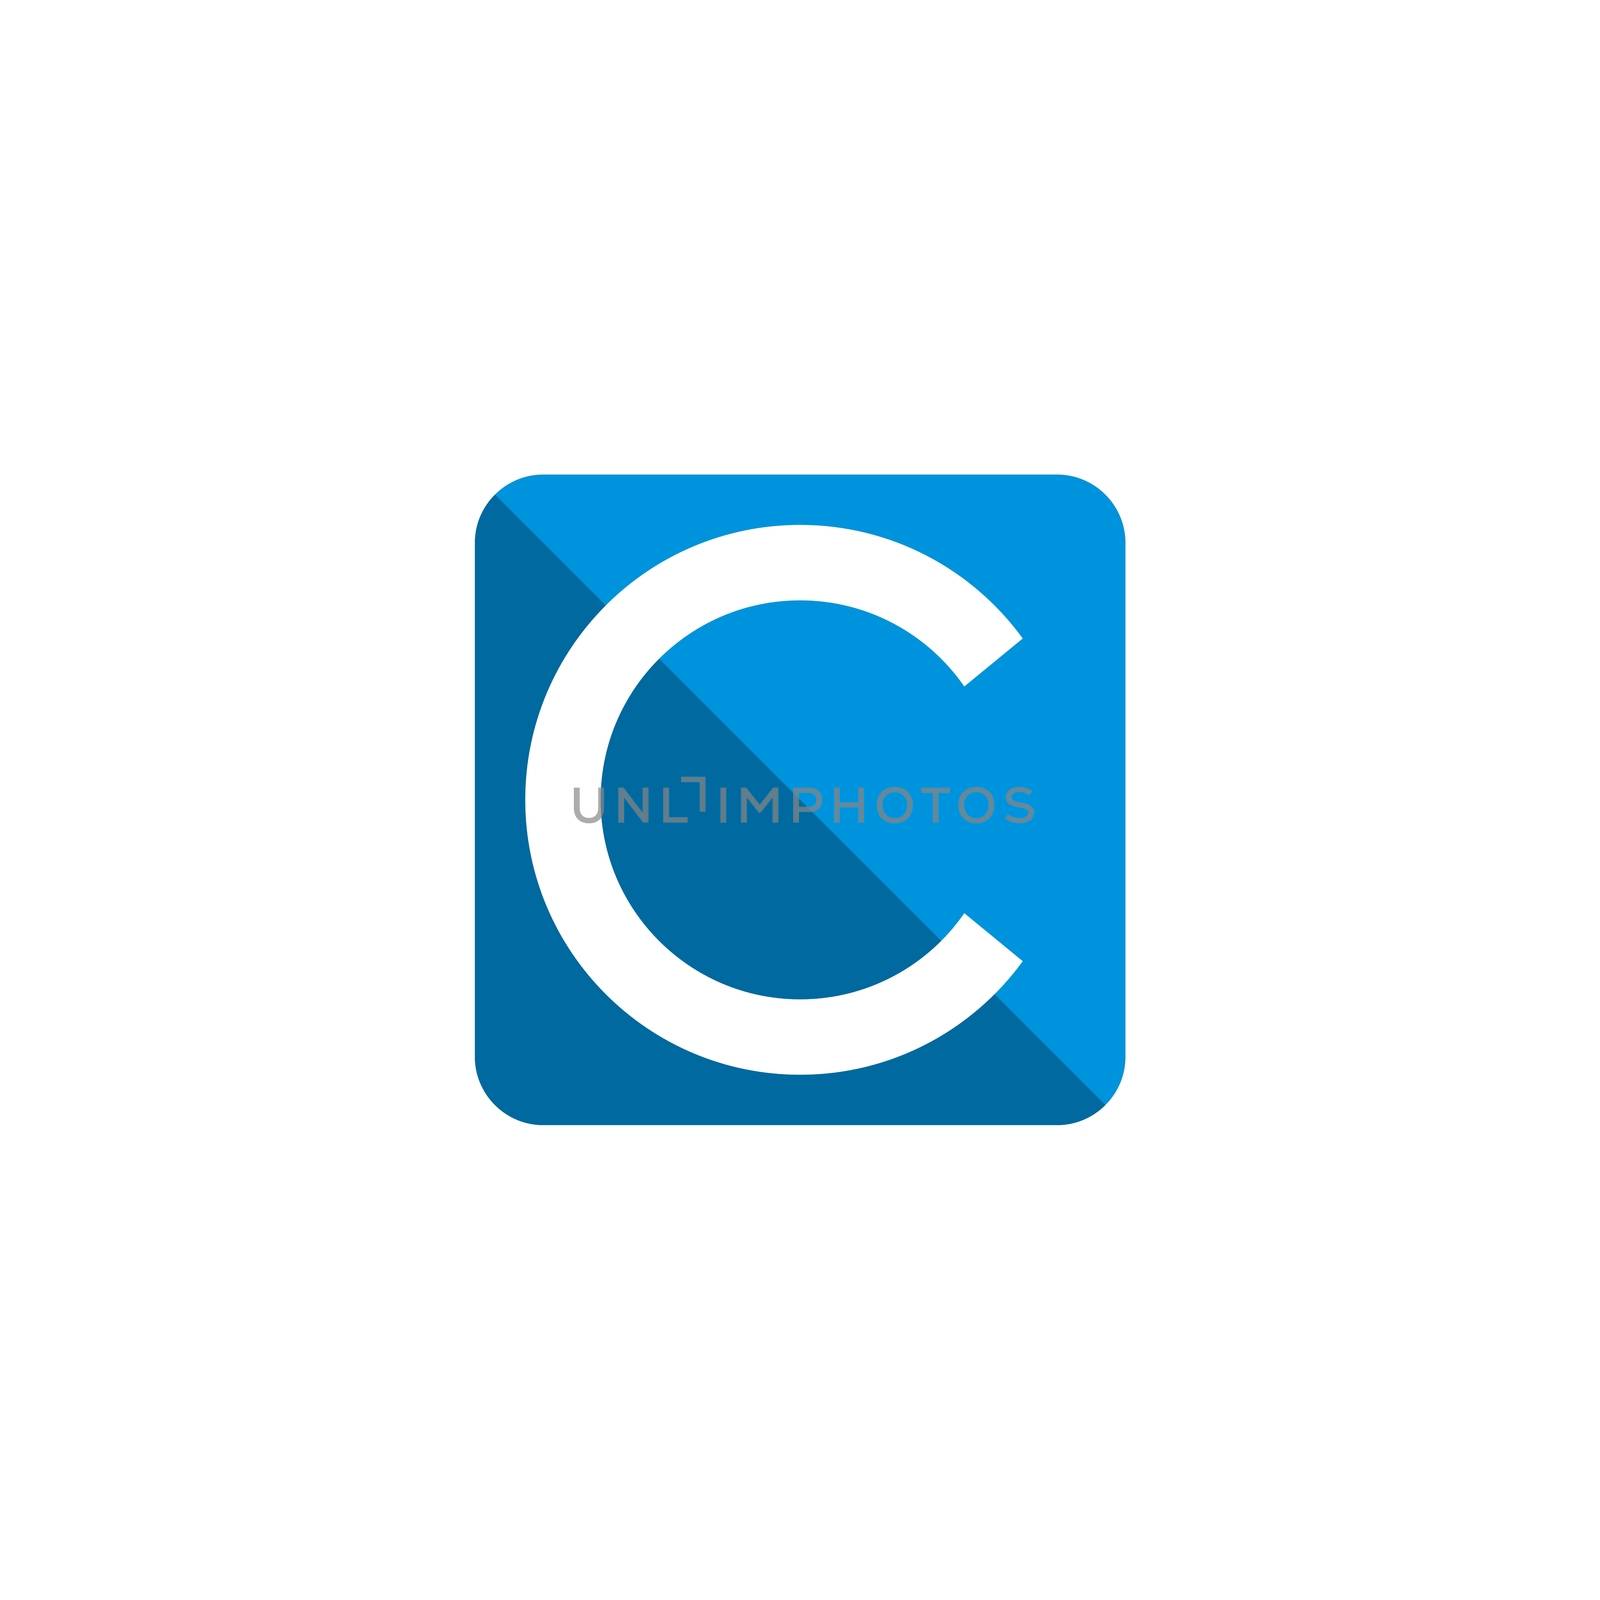 C Letter Blue Square Logo Template Illustration Design. Vector EPS 10.